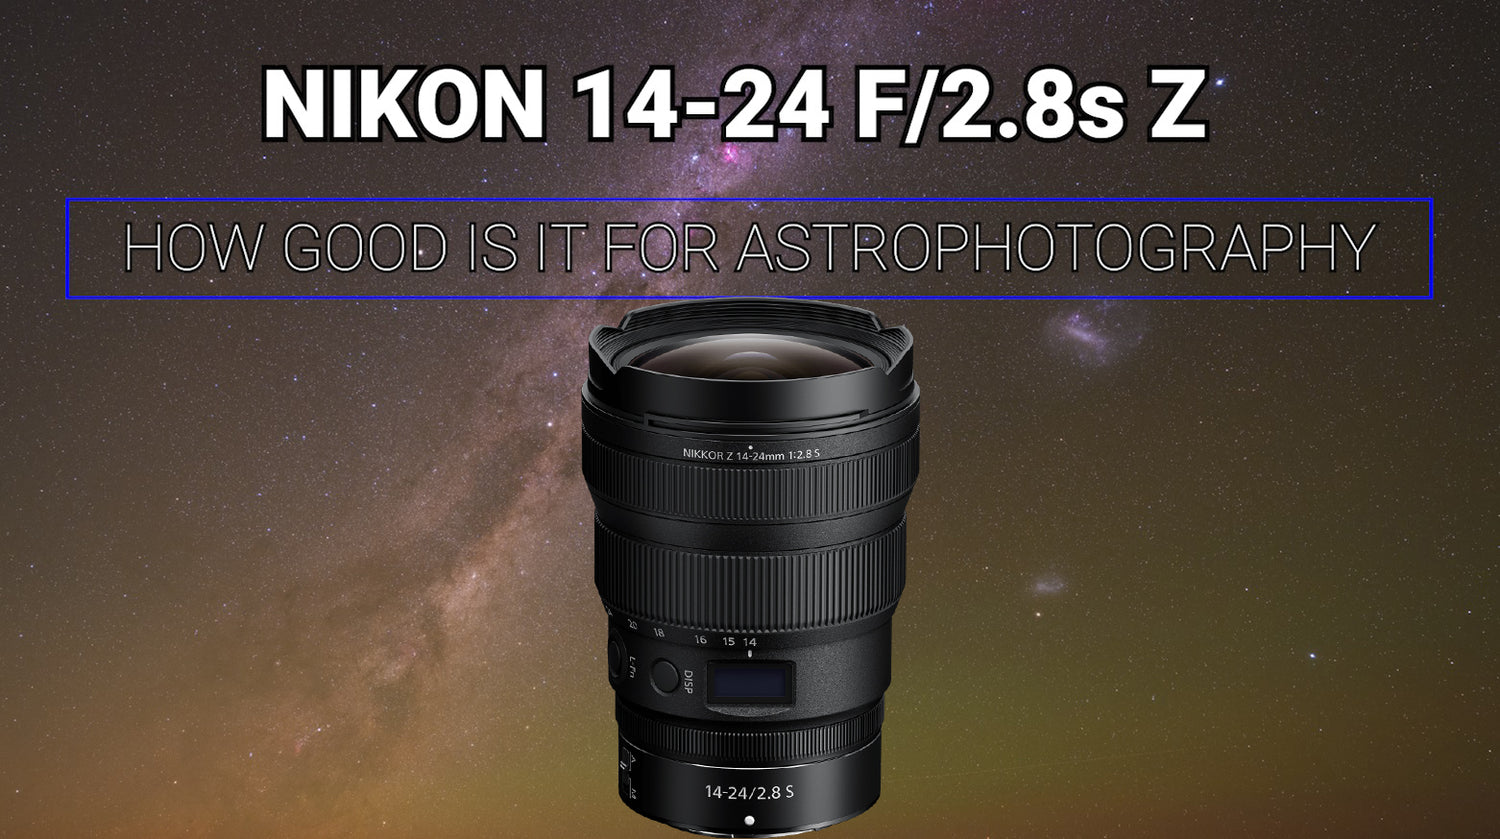 Nikon 14-24 F/2.8 S Z Lens - Astrophotography